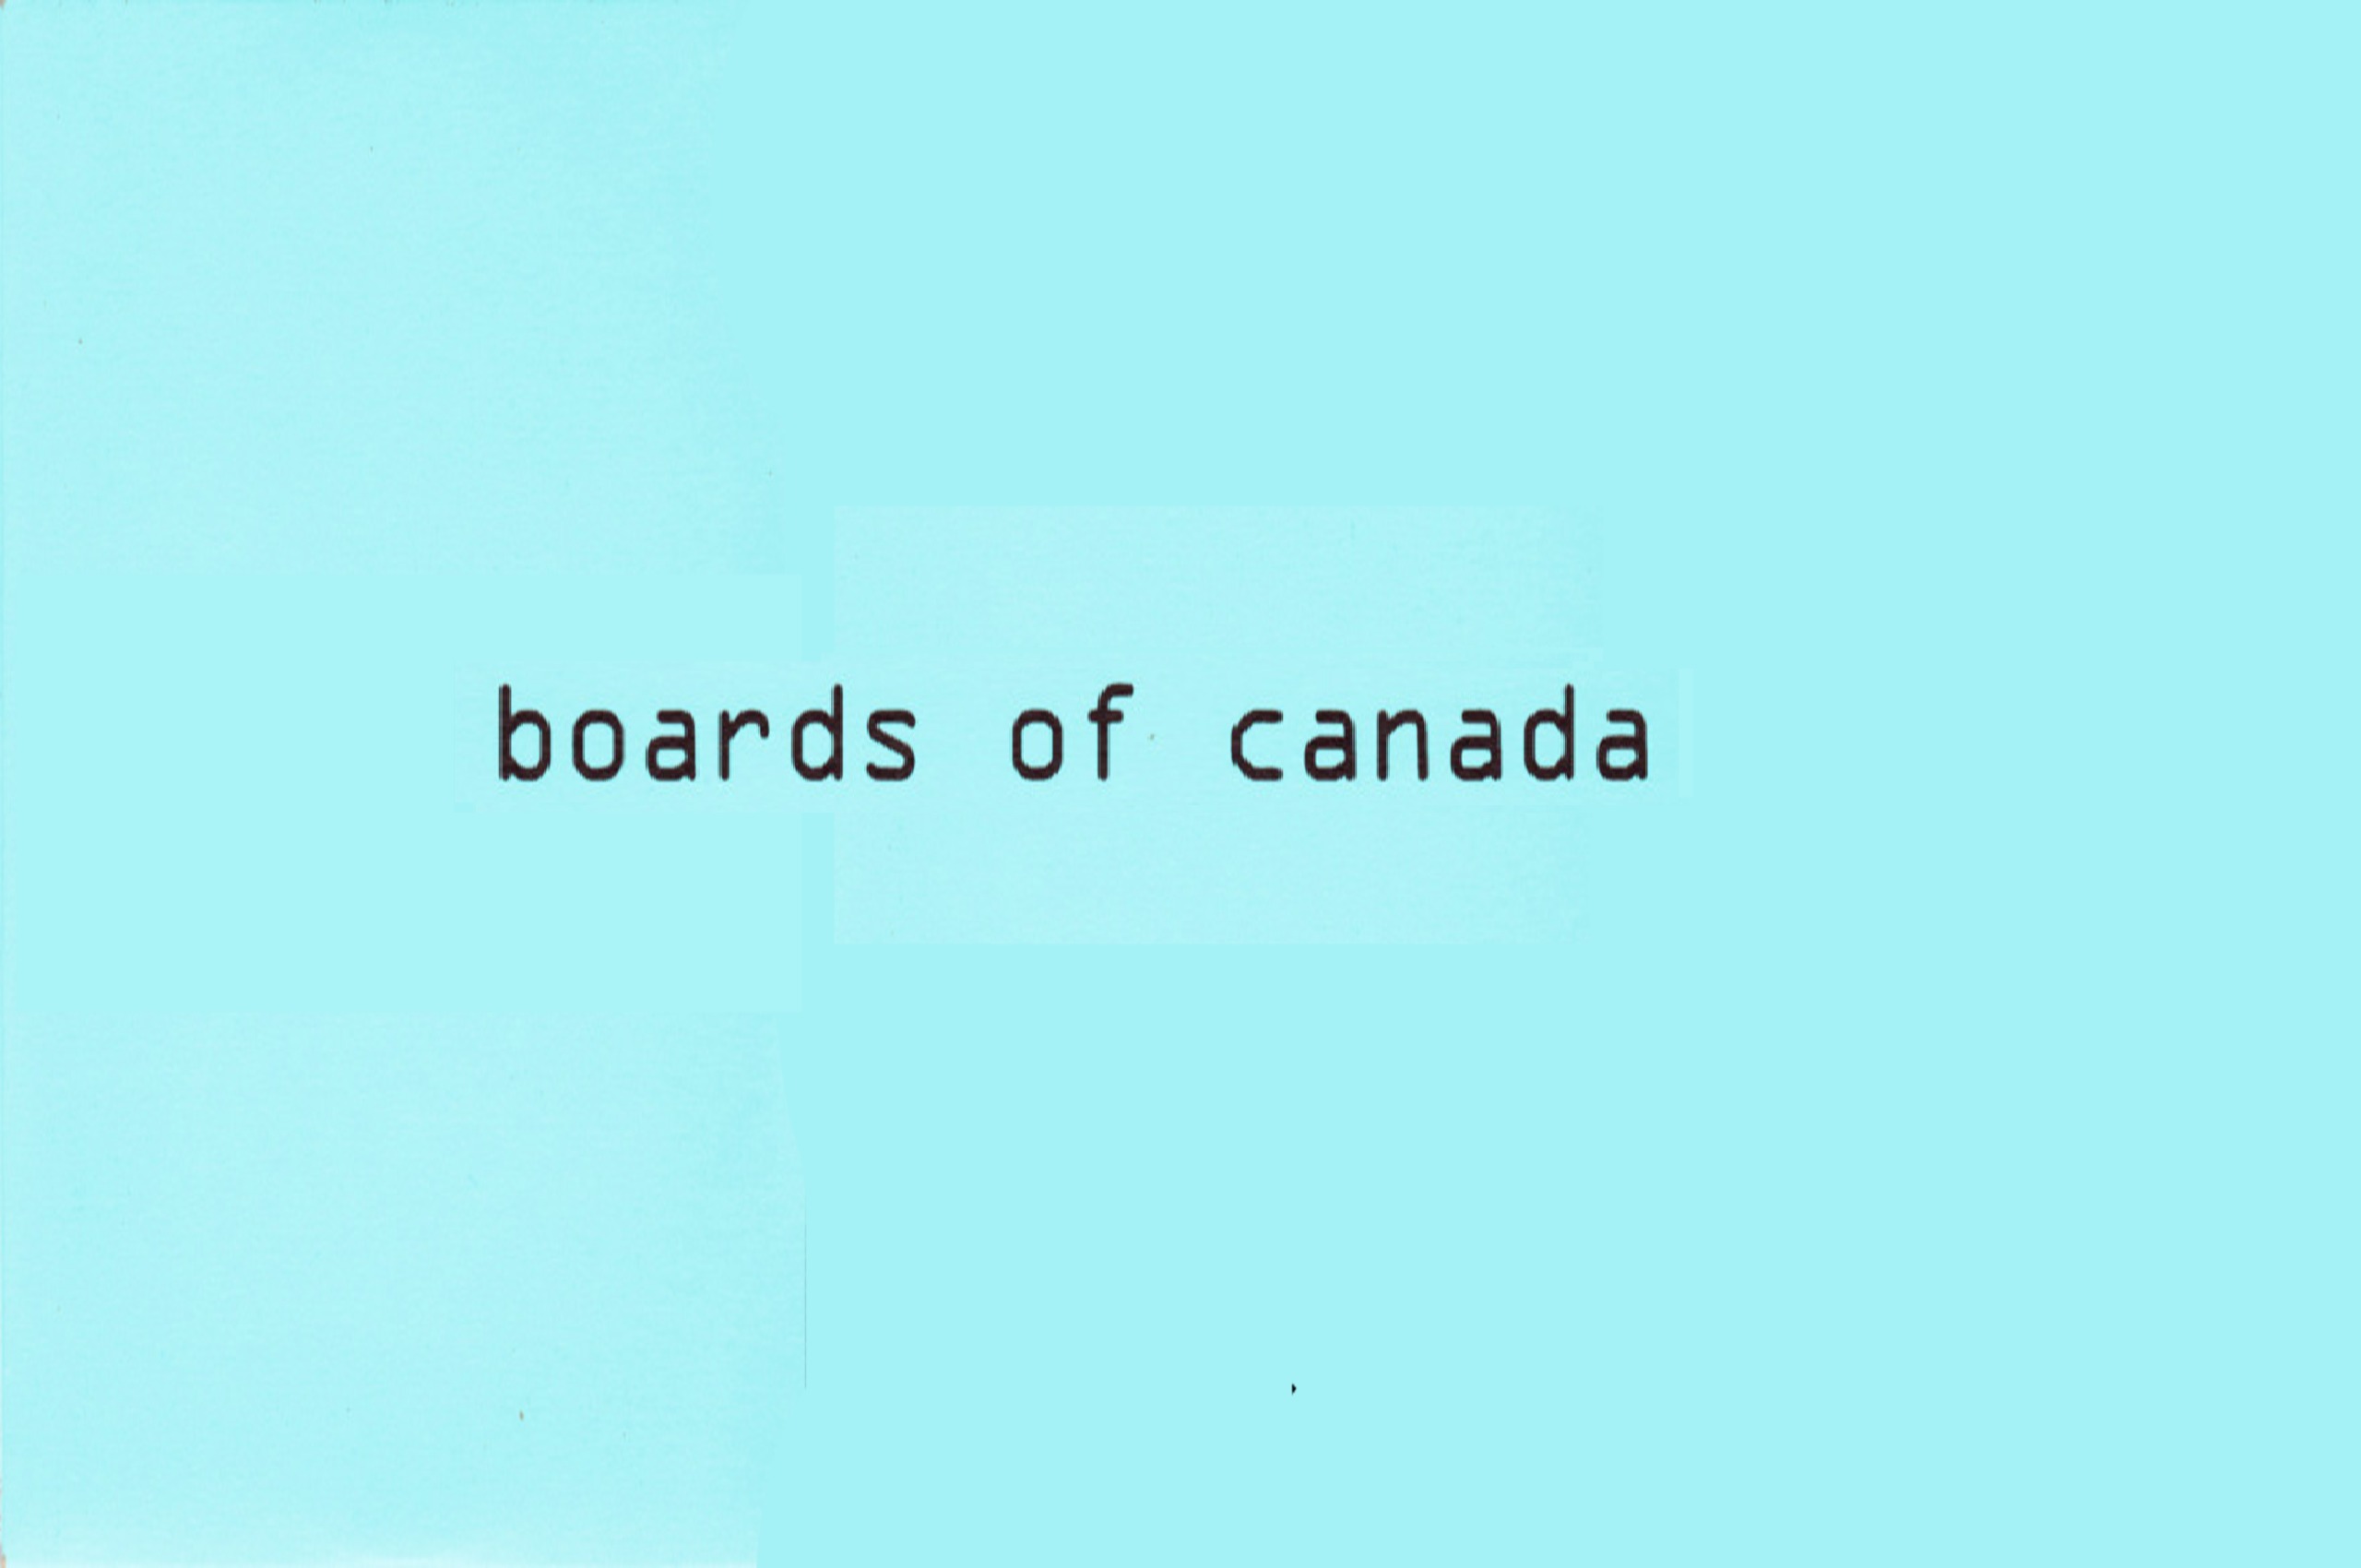 Boards of Canada